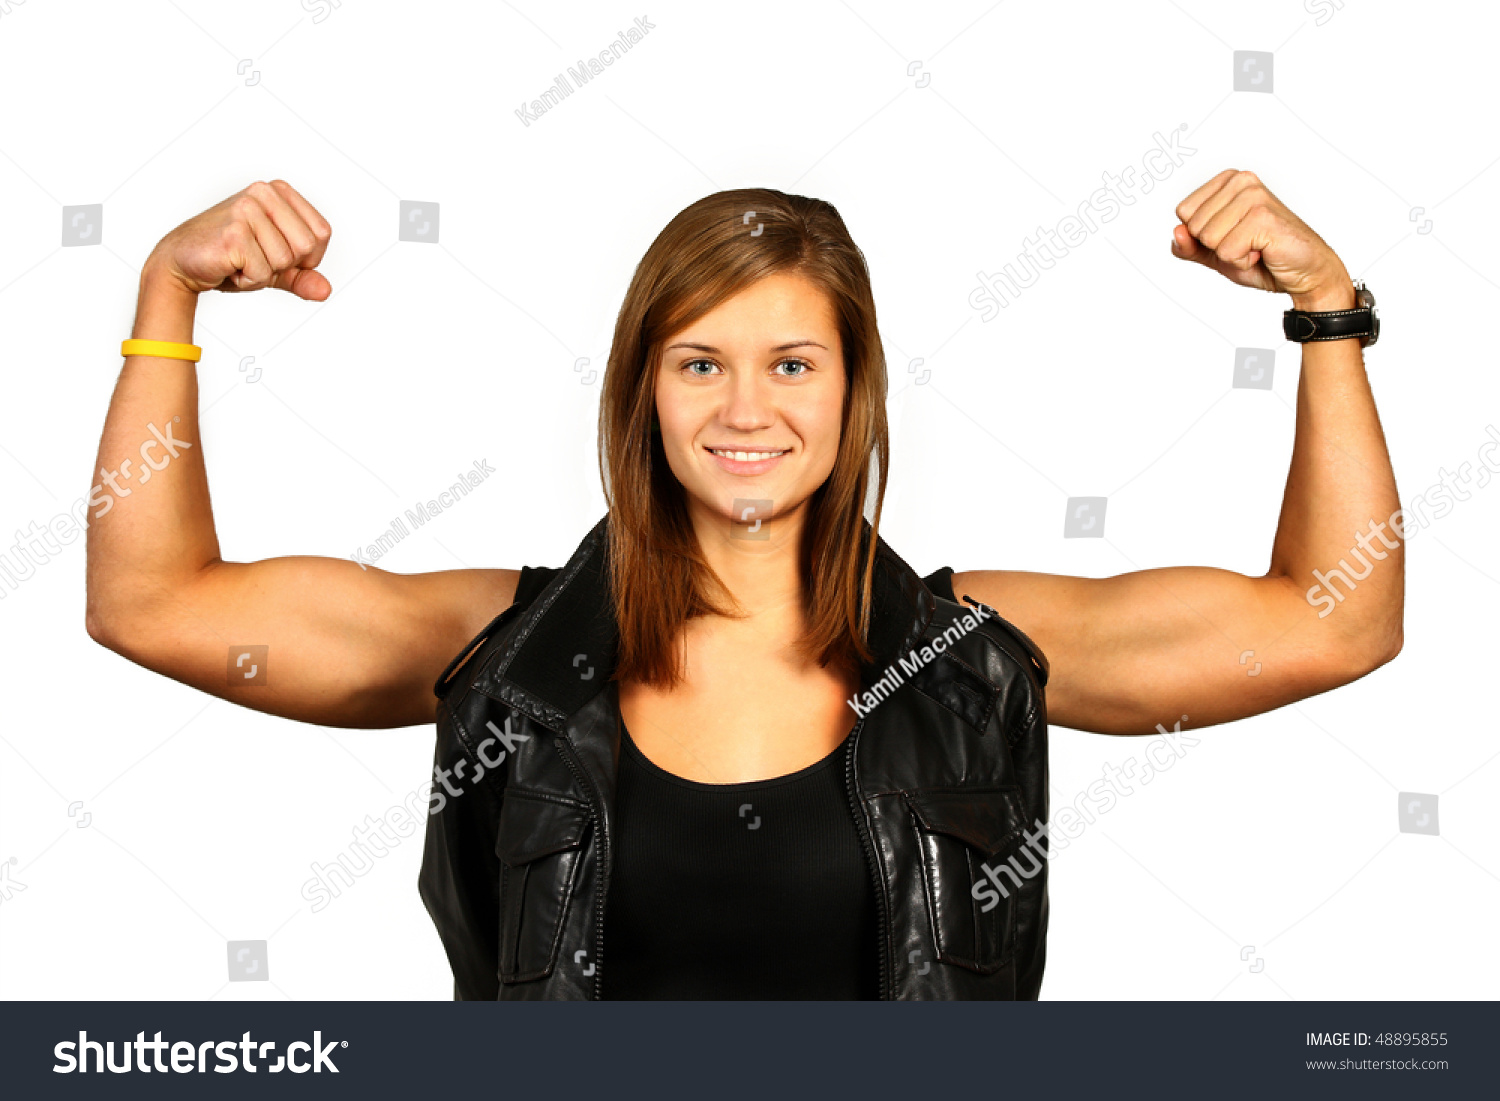 Very Strong Women